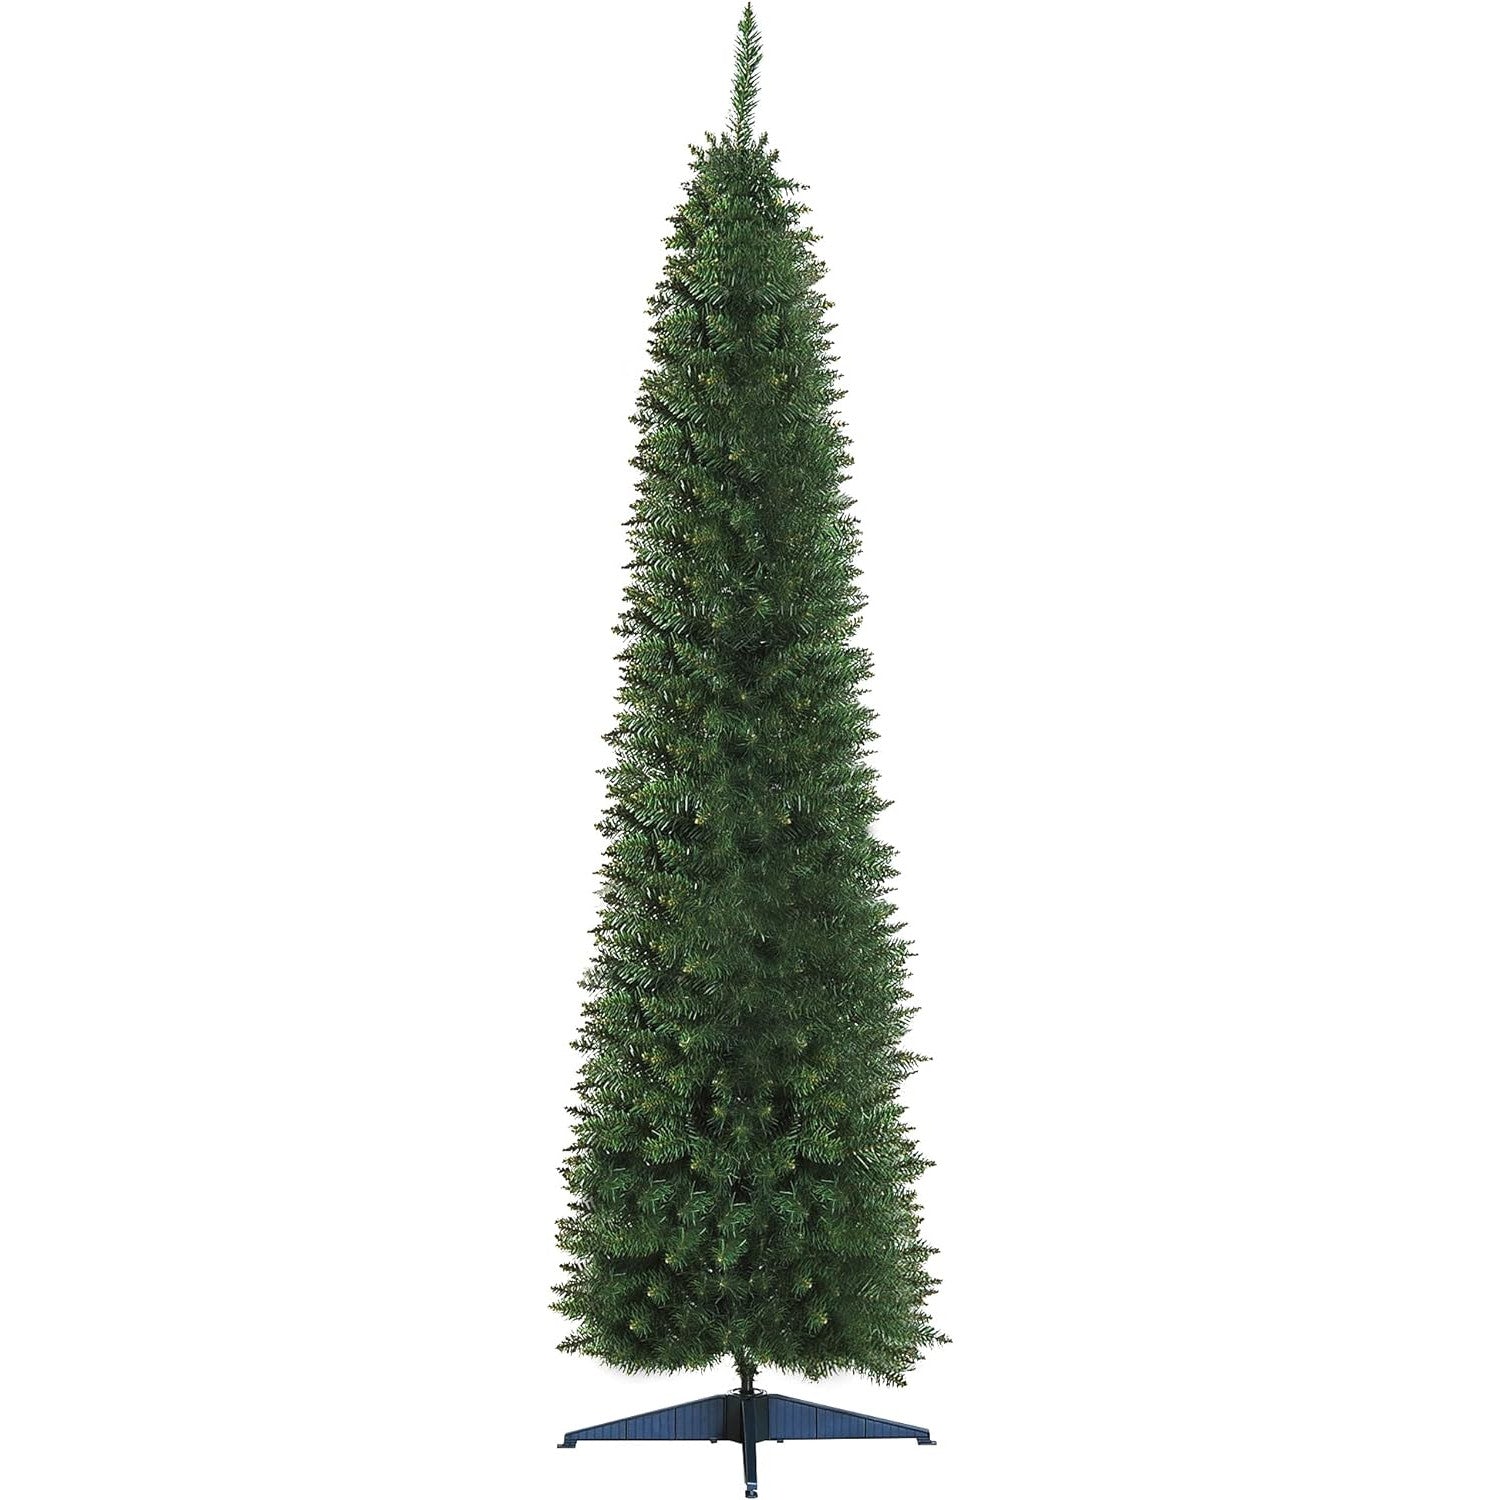 HOMCOM 7ft Artificial Pine Pencil Slim Christmas Tree with Stand